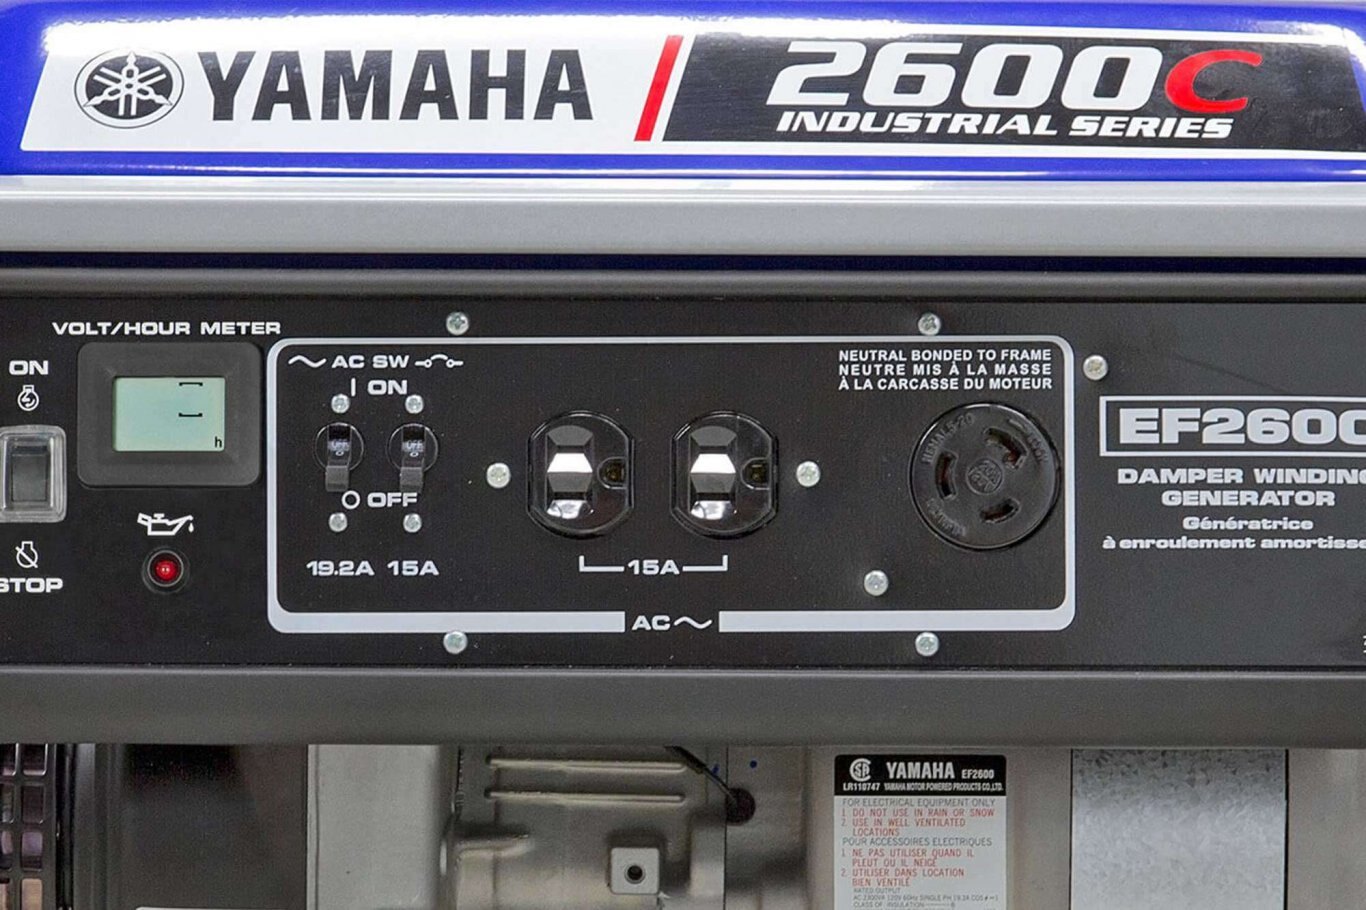 YamahaEF2600C